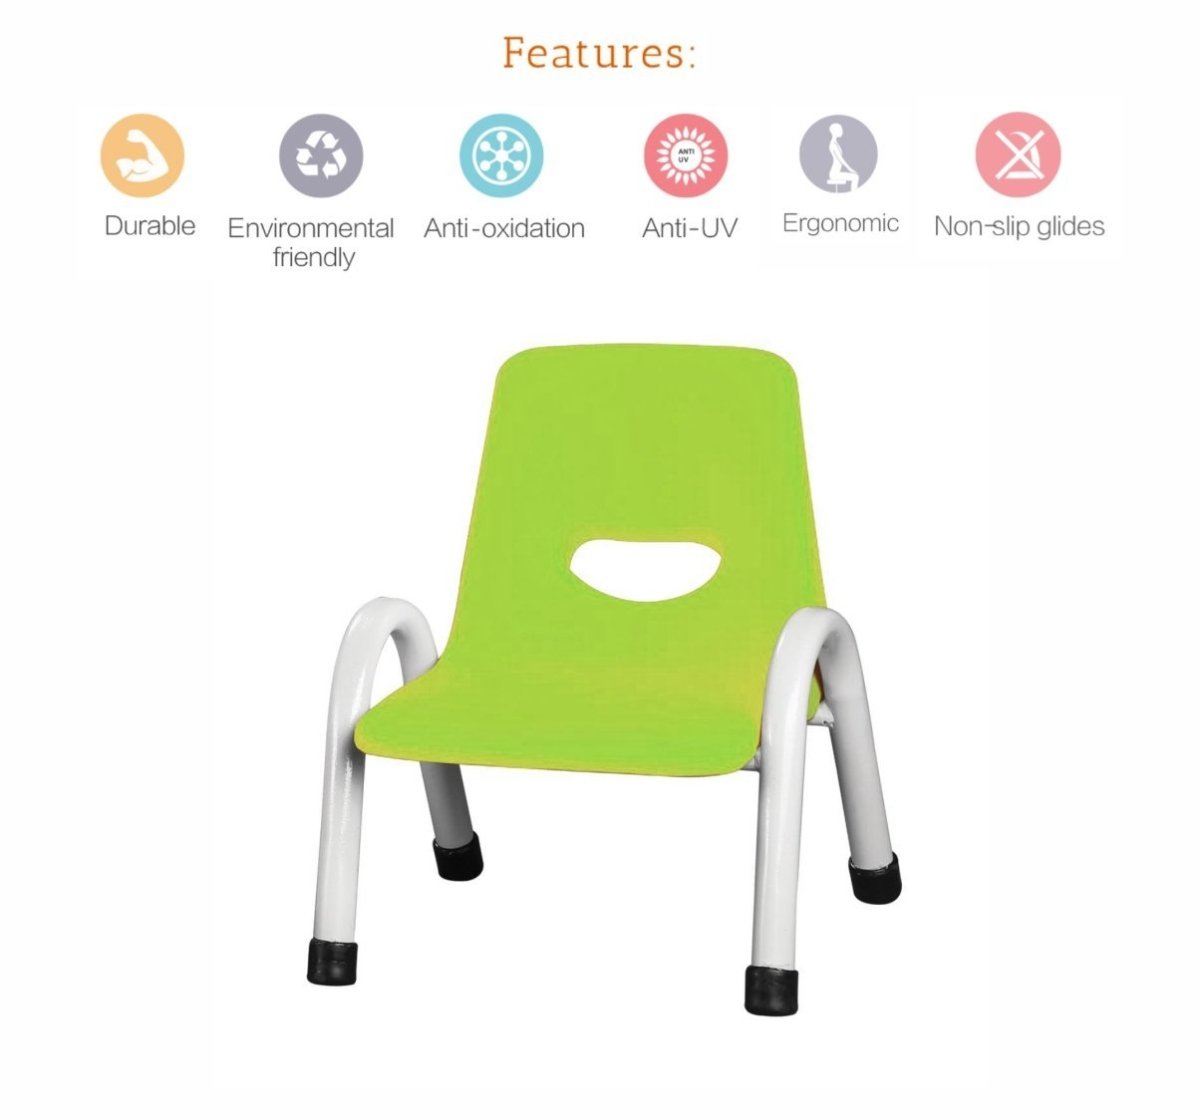 OK Play Cute Chair - Parrot Green & Ivory white - 9420B